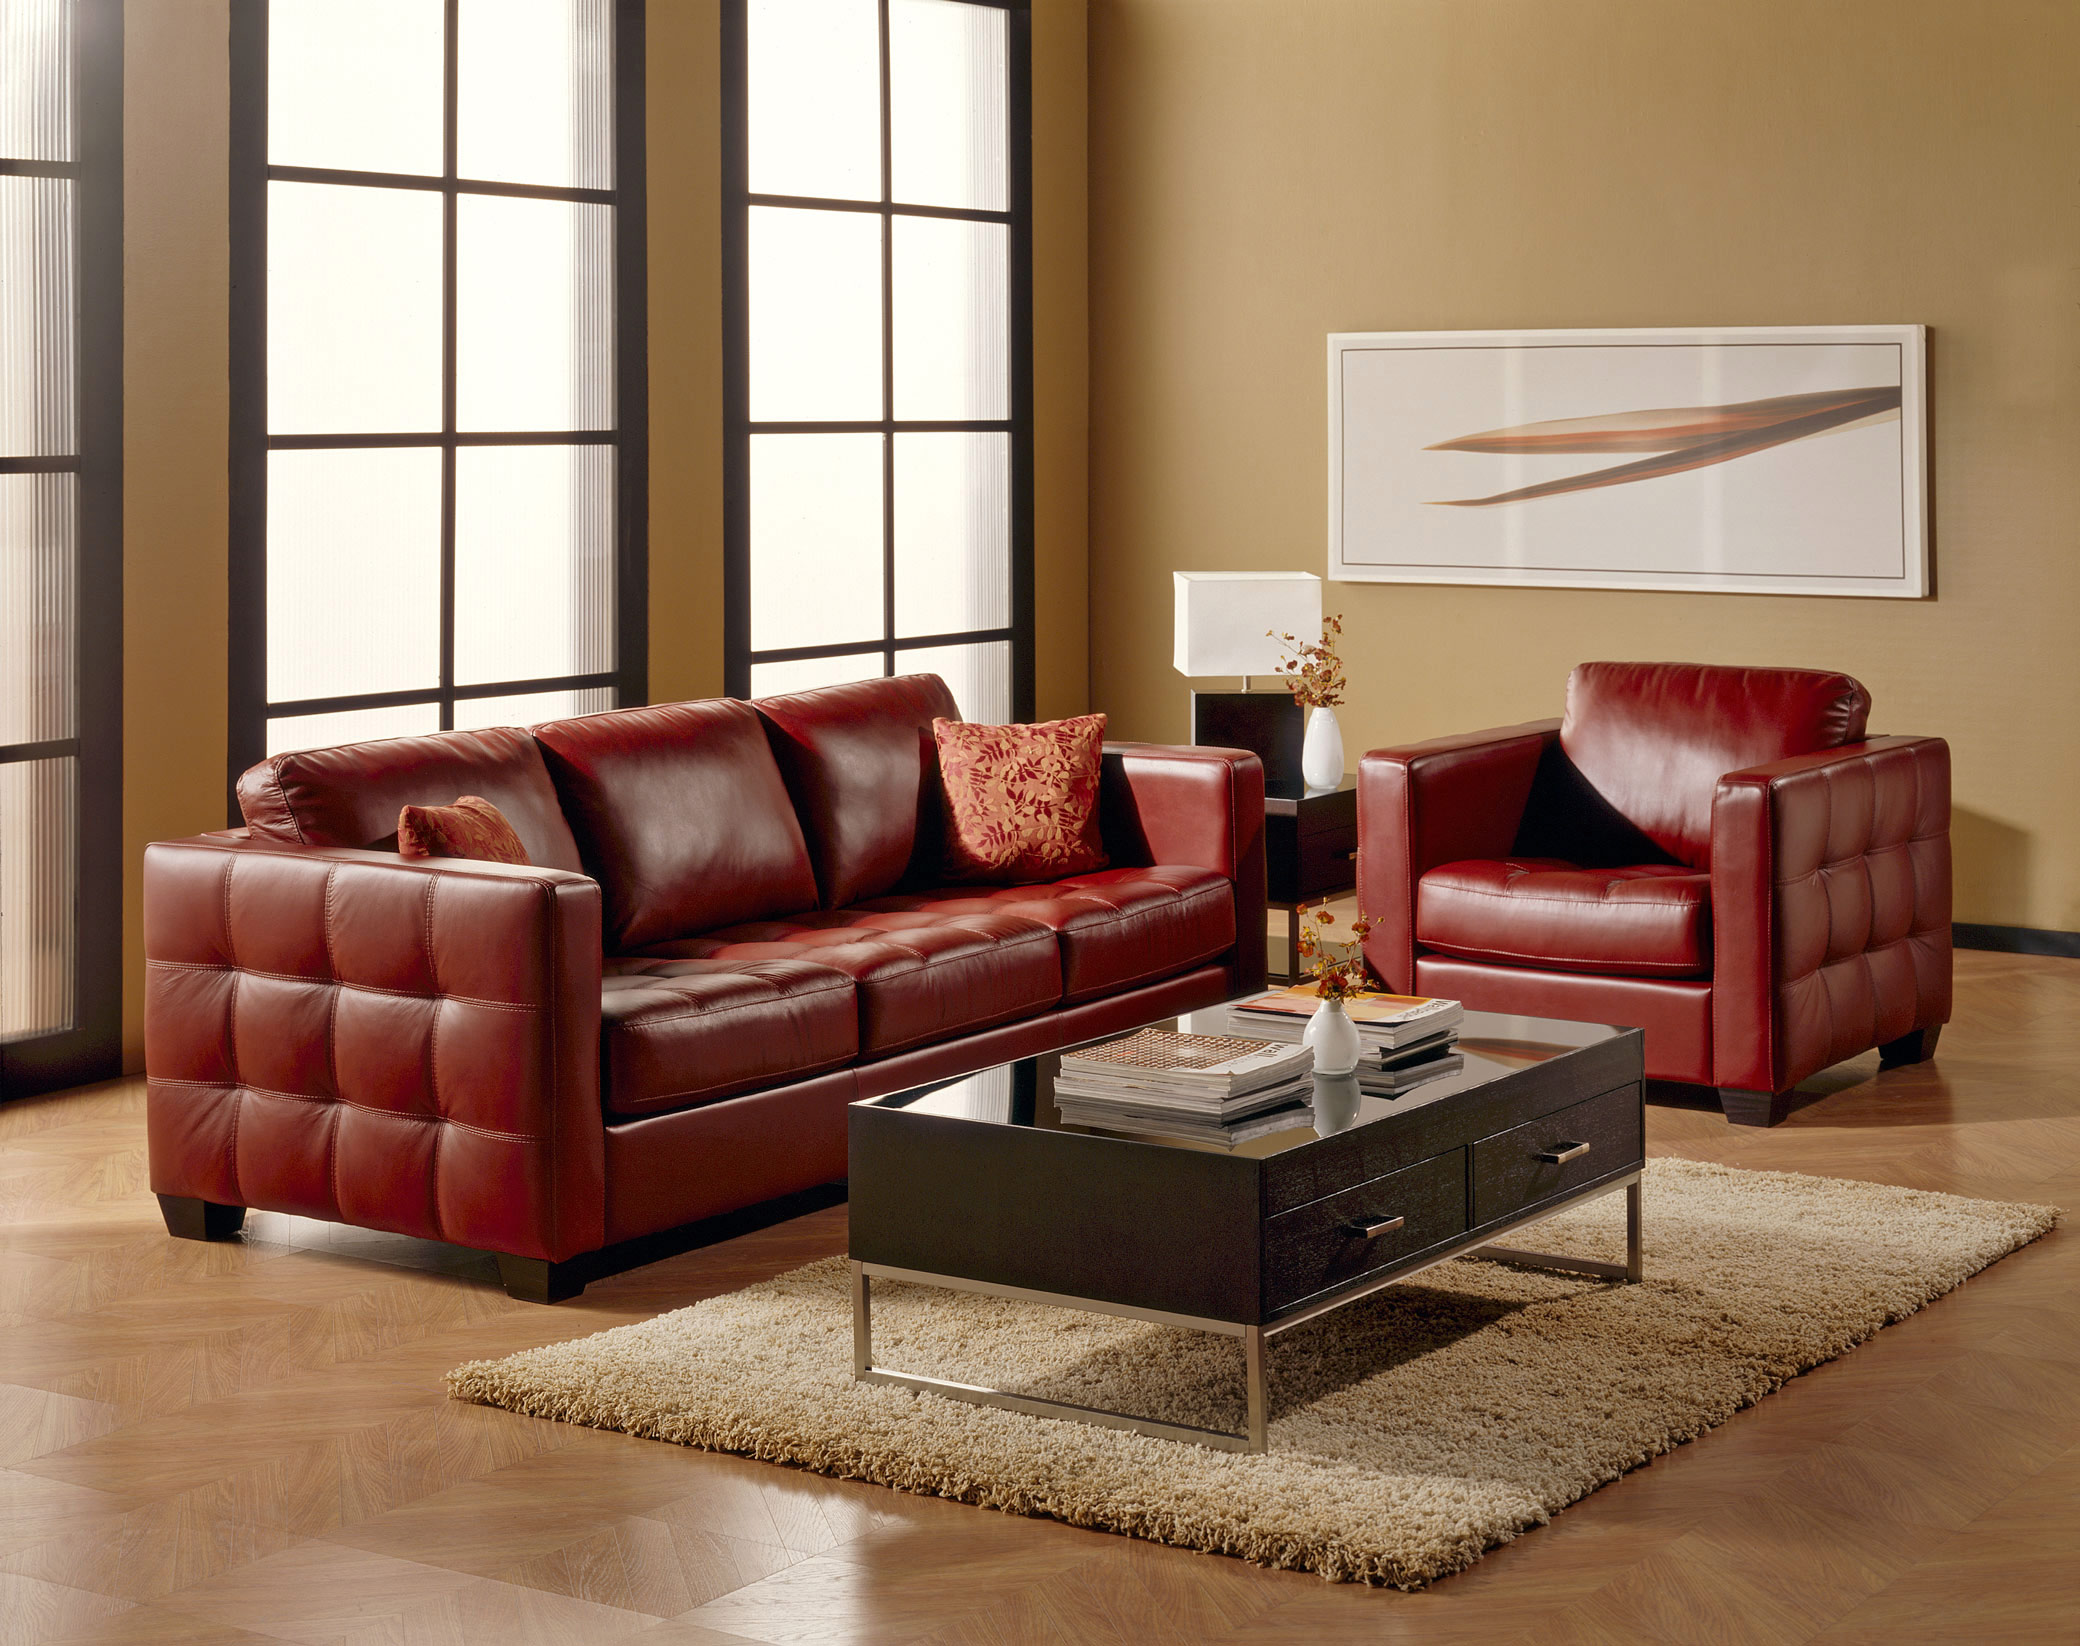 barrett leather sleeper sofa